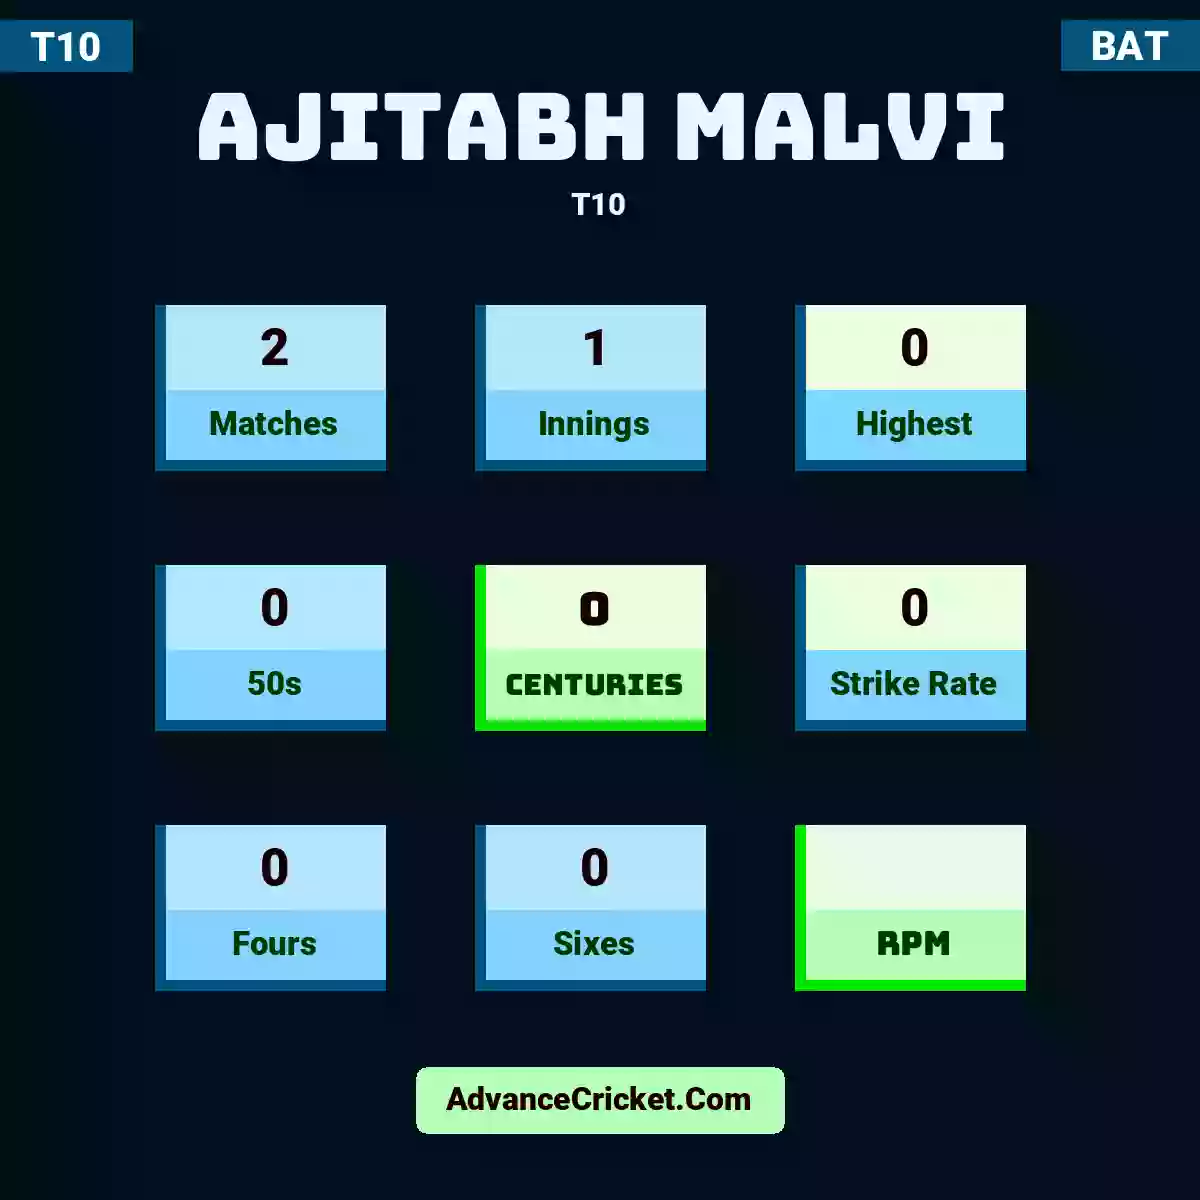 Ajitabh Malvi T10 , Ajitabh Malvi played 2 matches, scored 0 runs as highest, 0 half-centuries, and 0 centuries, with a strike rate of 0. A.Malvi hit 0 fours and 0 sixes.